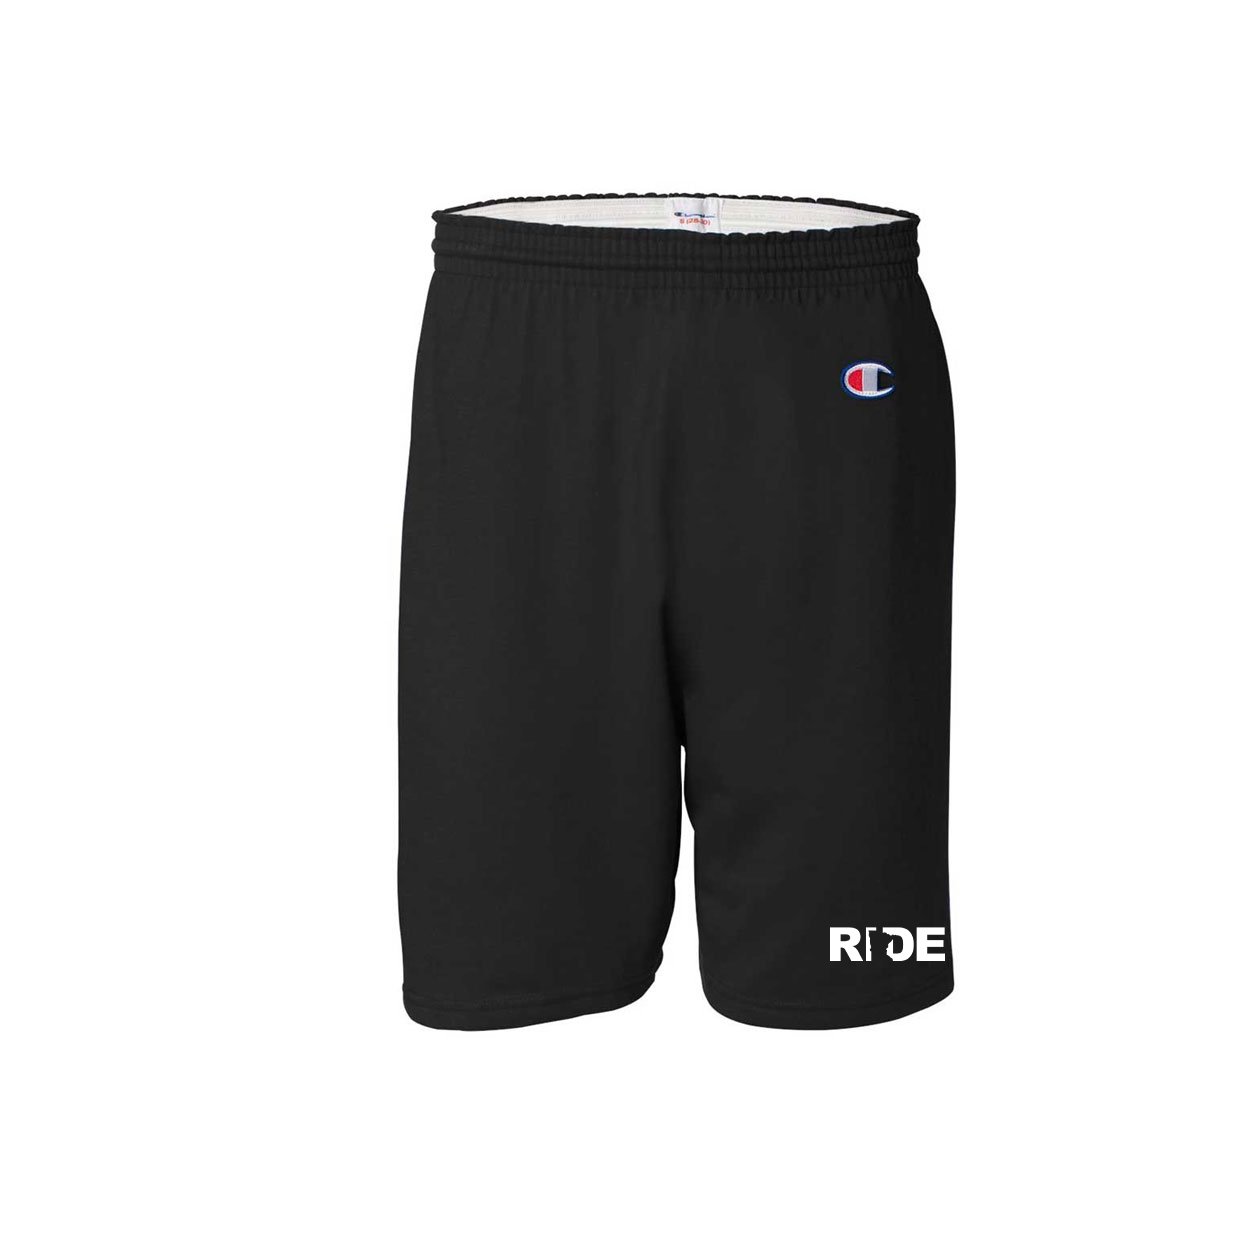 Ride Minnesota Classic Men's Unisex Gym Shorts Black with Pockets Black